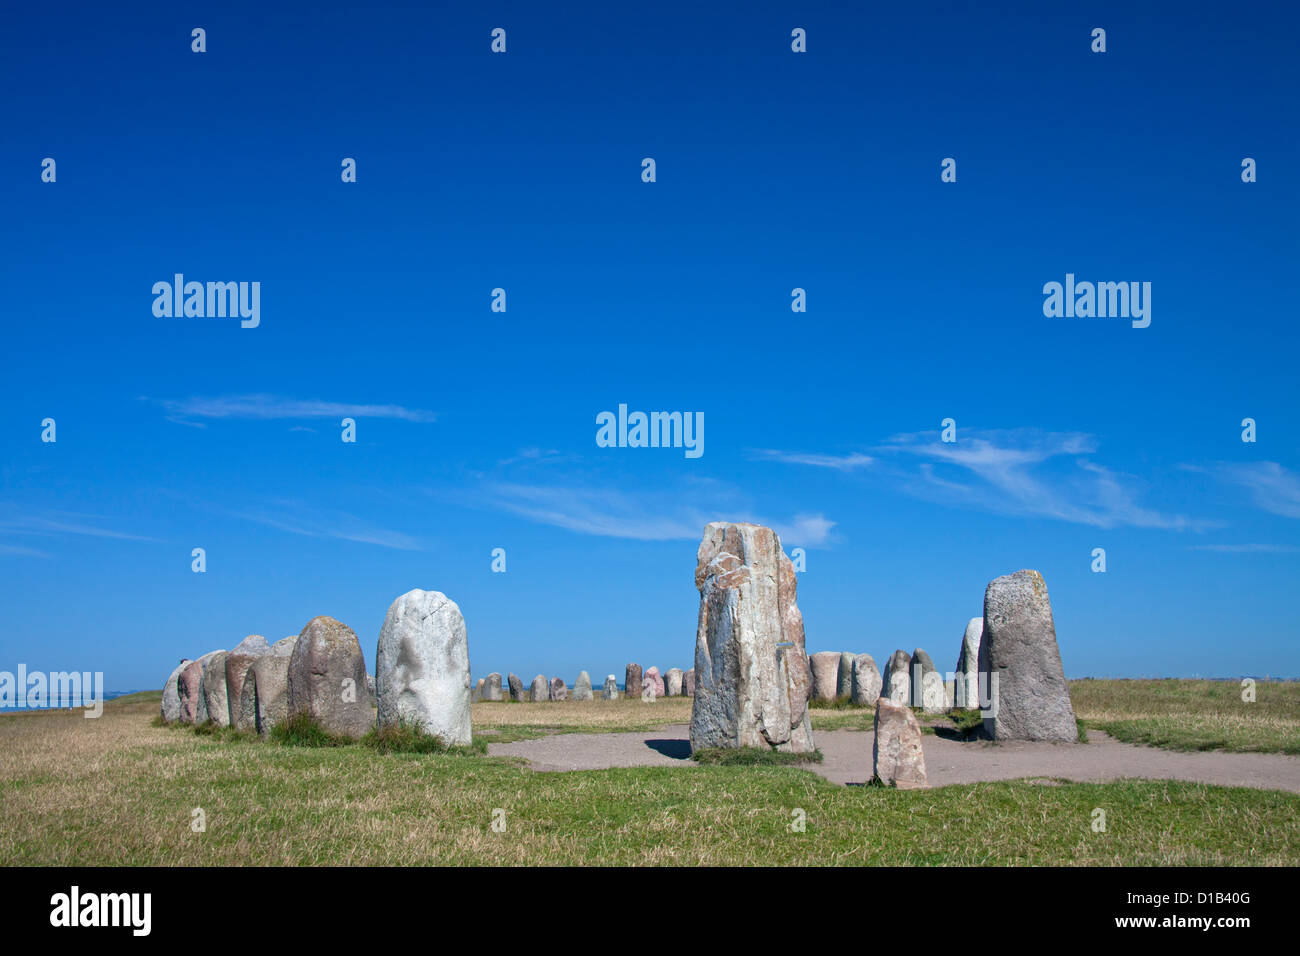 Ale's Stones / Ales stenar, megalithic stone circle monument representing stone ship near Kåseberga in Scania / Skåne, Sweden Stock Photo